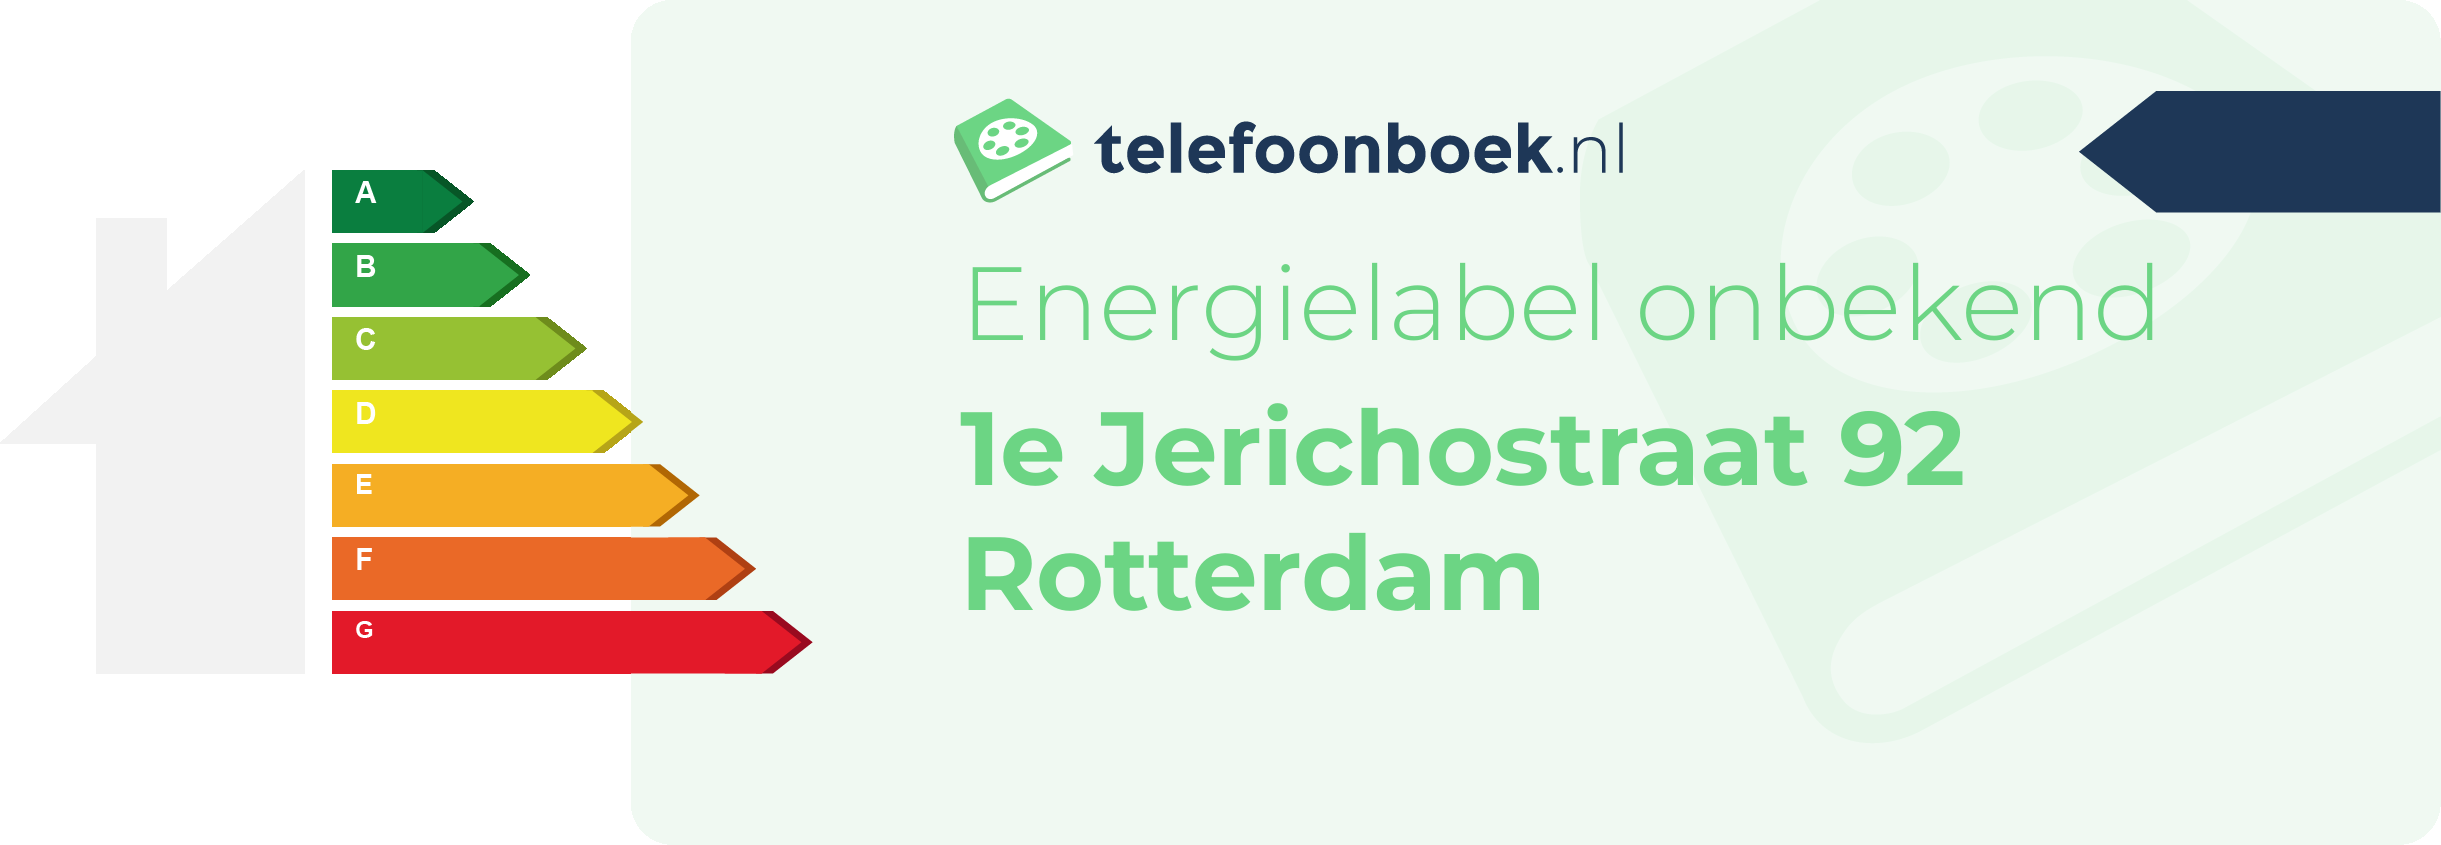 Energielabel 1e Jerichostraat 92 Rotterdam